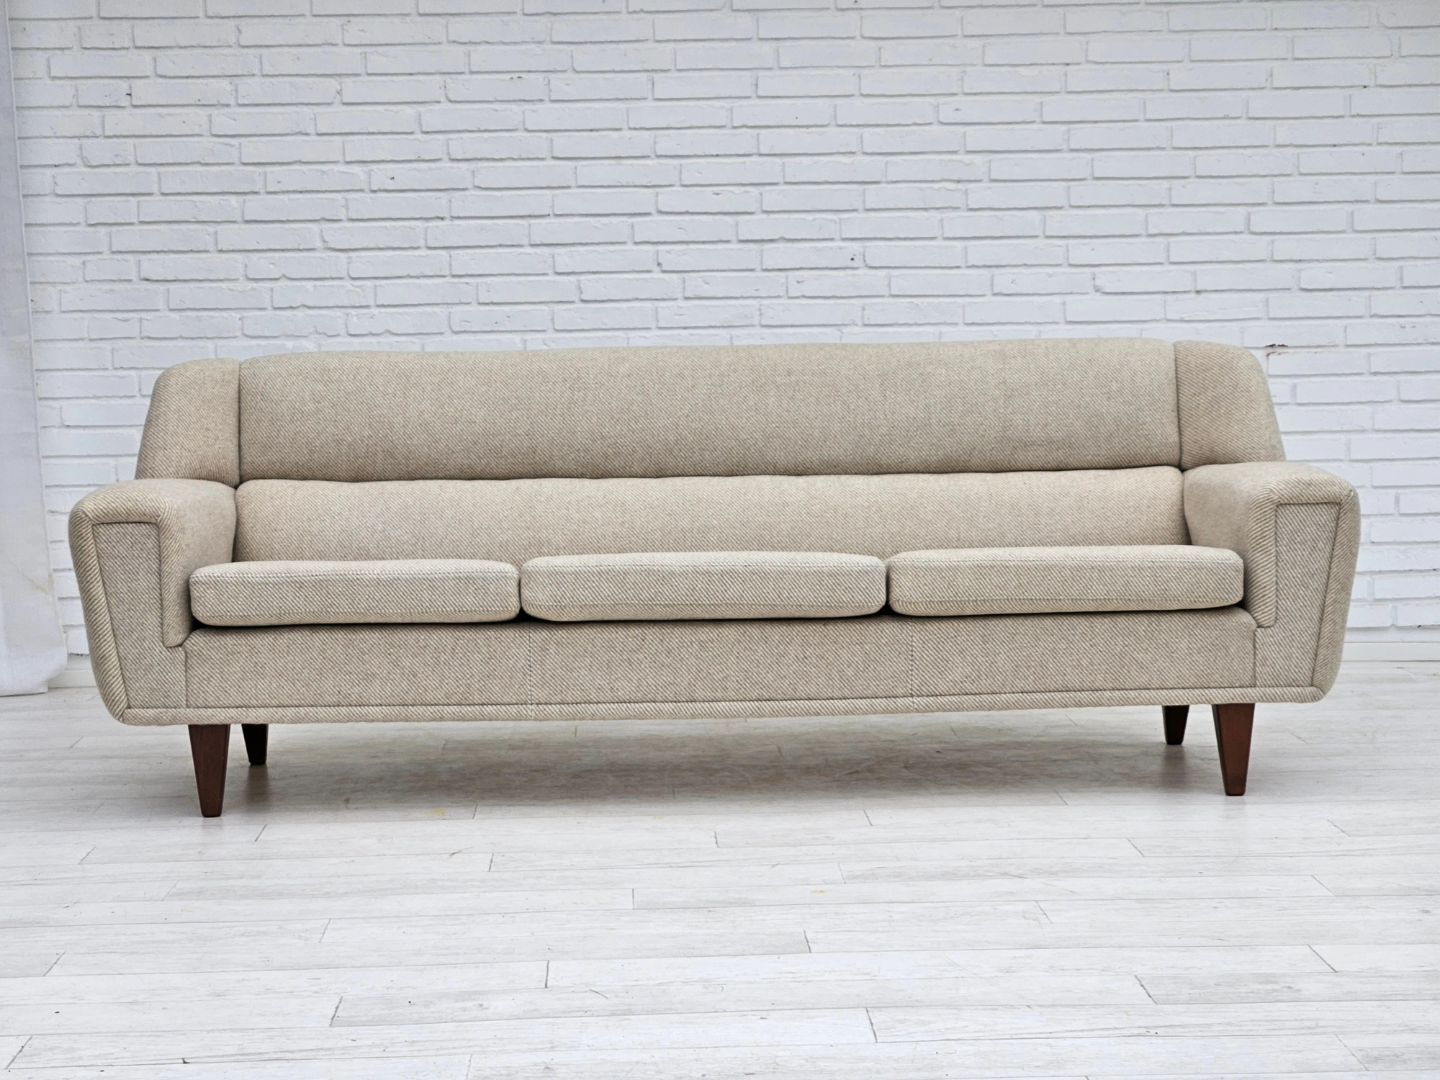 1960s, Danish design sofa by Kurt Østervig model 61, original good condition.